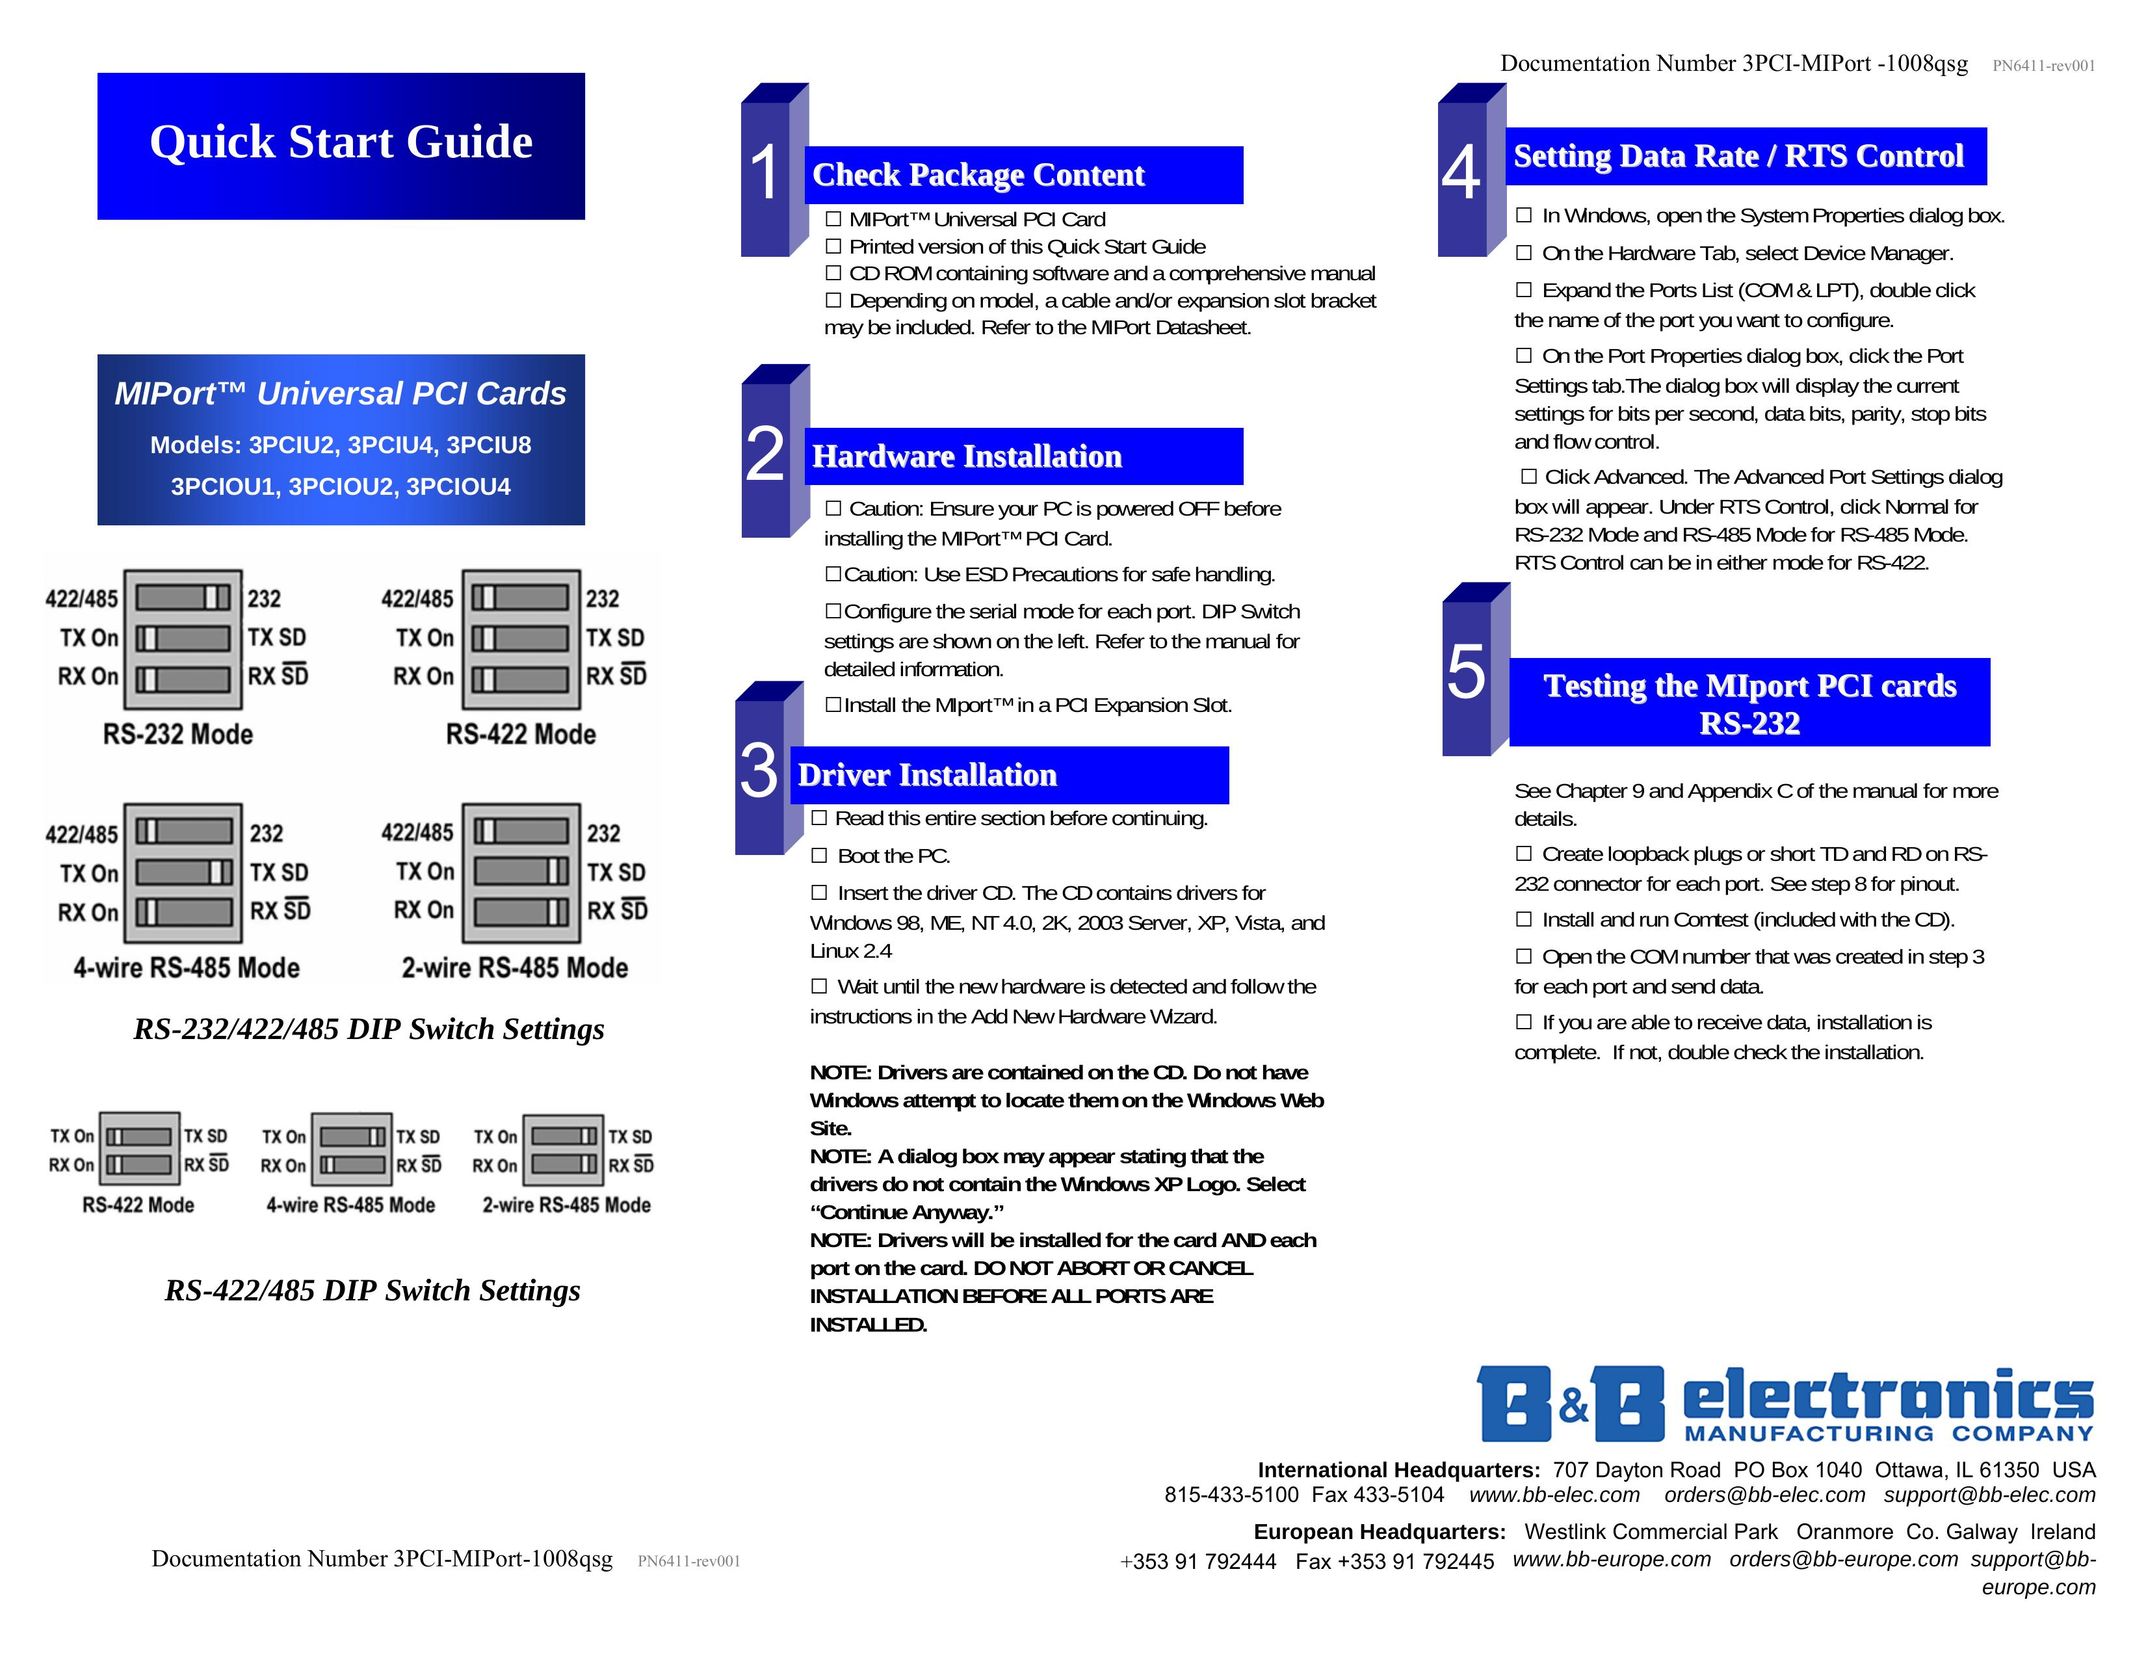 B&B Electronics 3PCIU8 Network Card User Manual